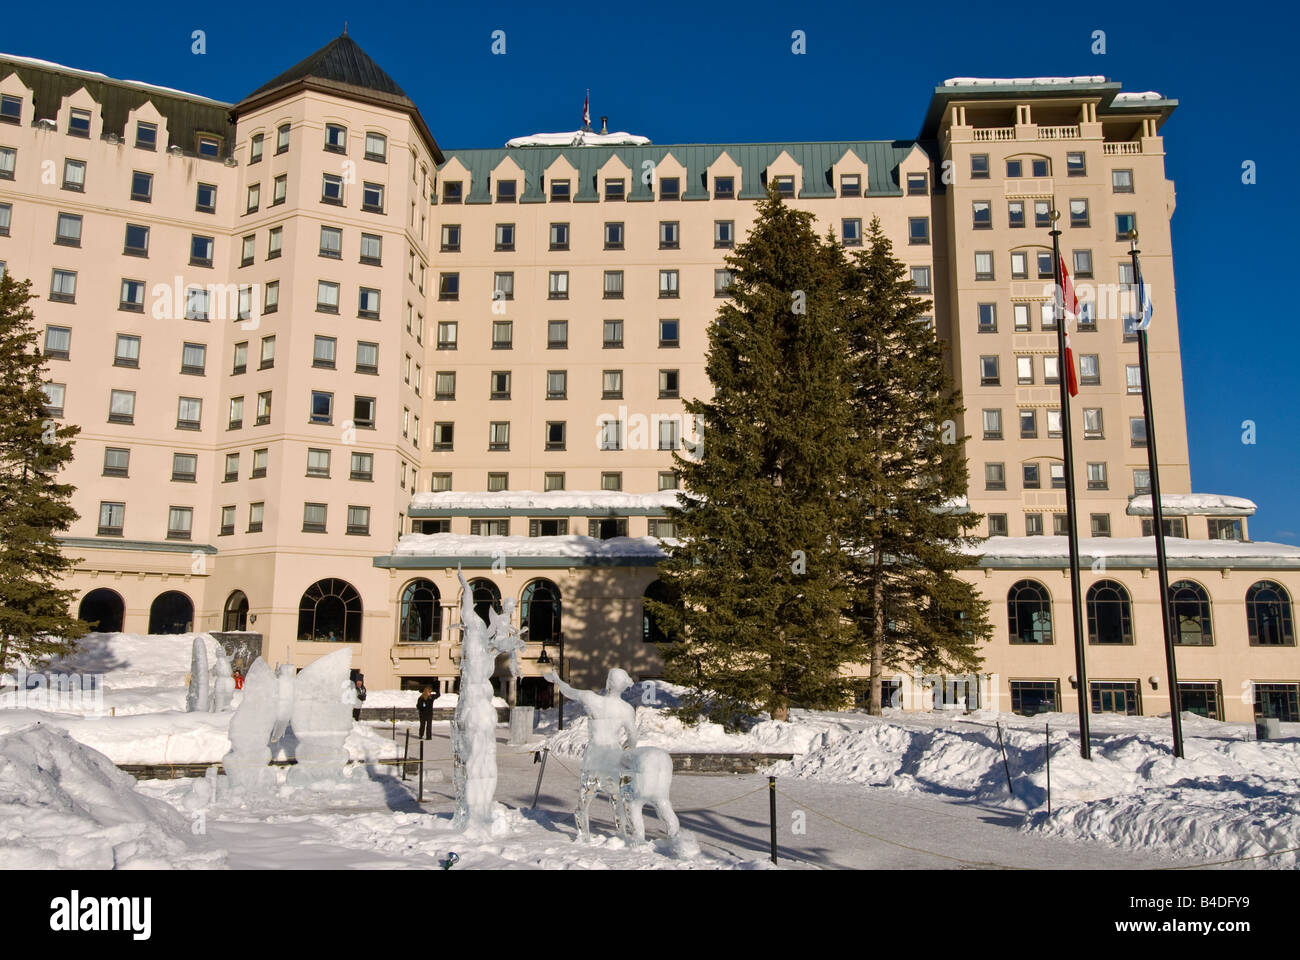 Fairmont chateau lake louise hotel ice sculptures snow banff alberta canada luxury resort Stock Photo